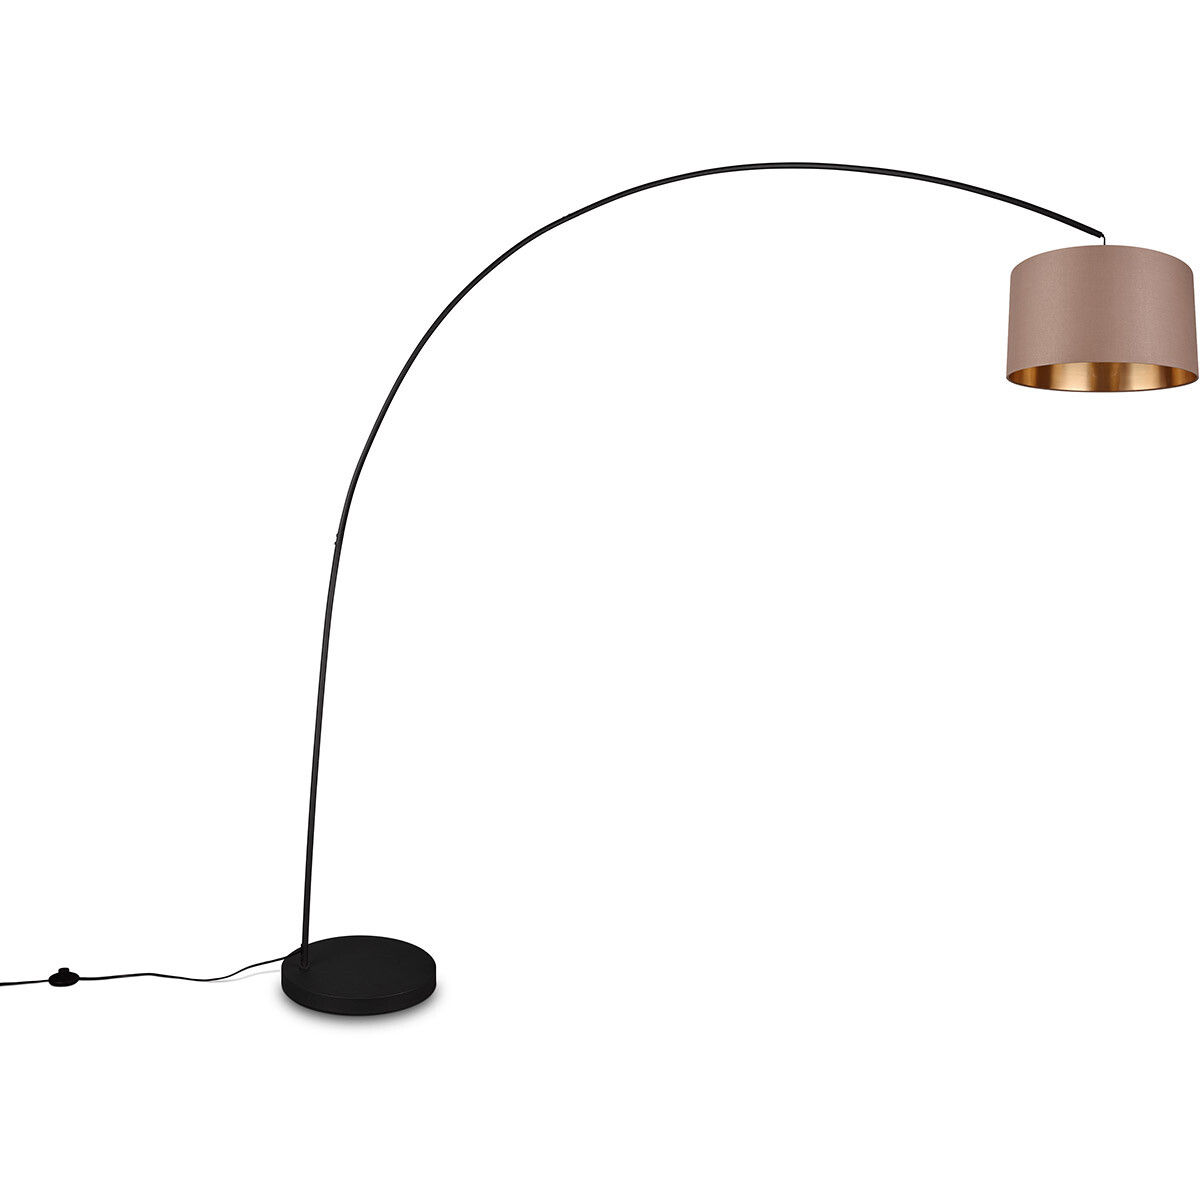 BES LED LED Vloerlamp - Trion Yavas - E27 Fitting - Voetschakelaar - Rond - Taupe - Metaal